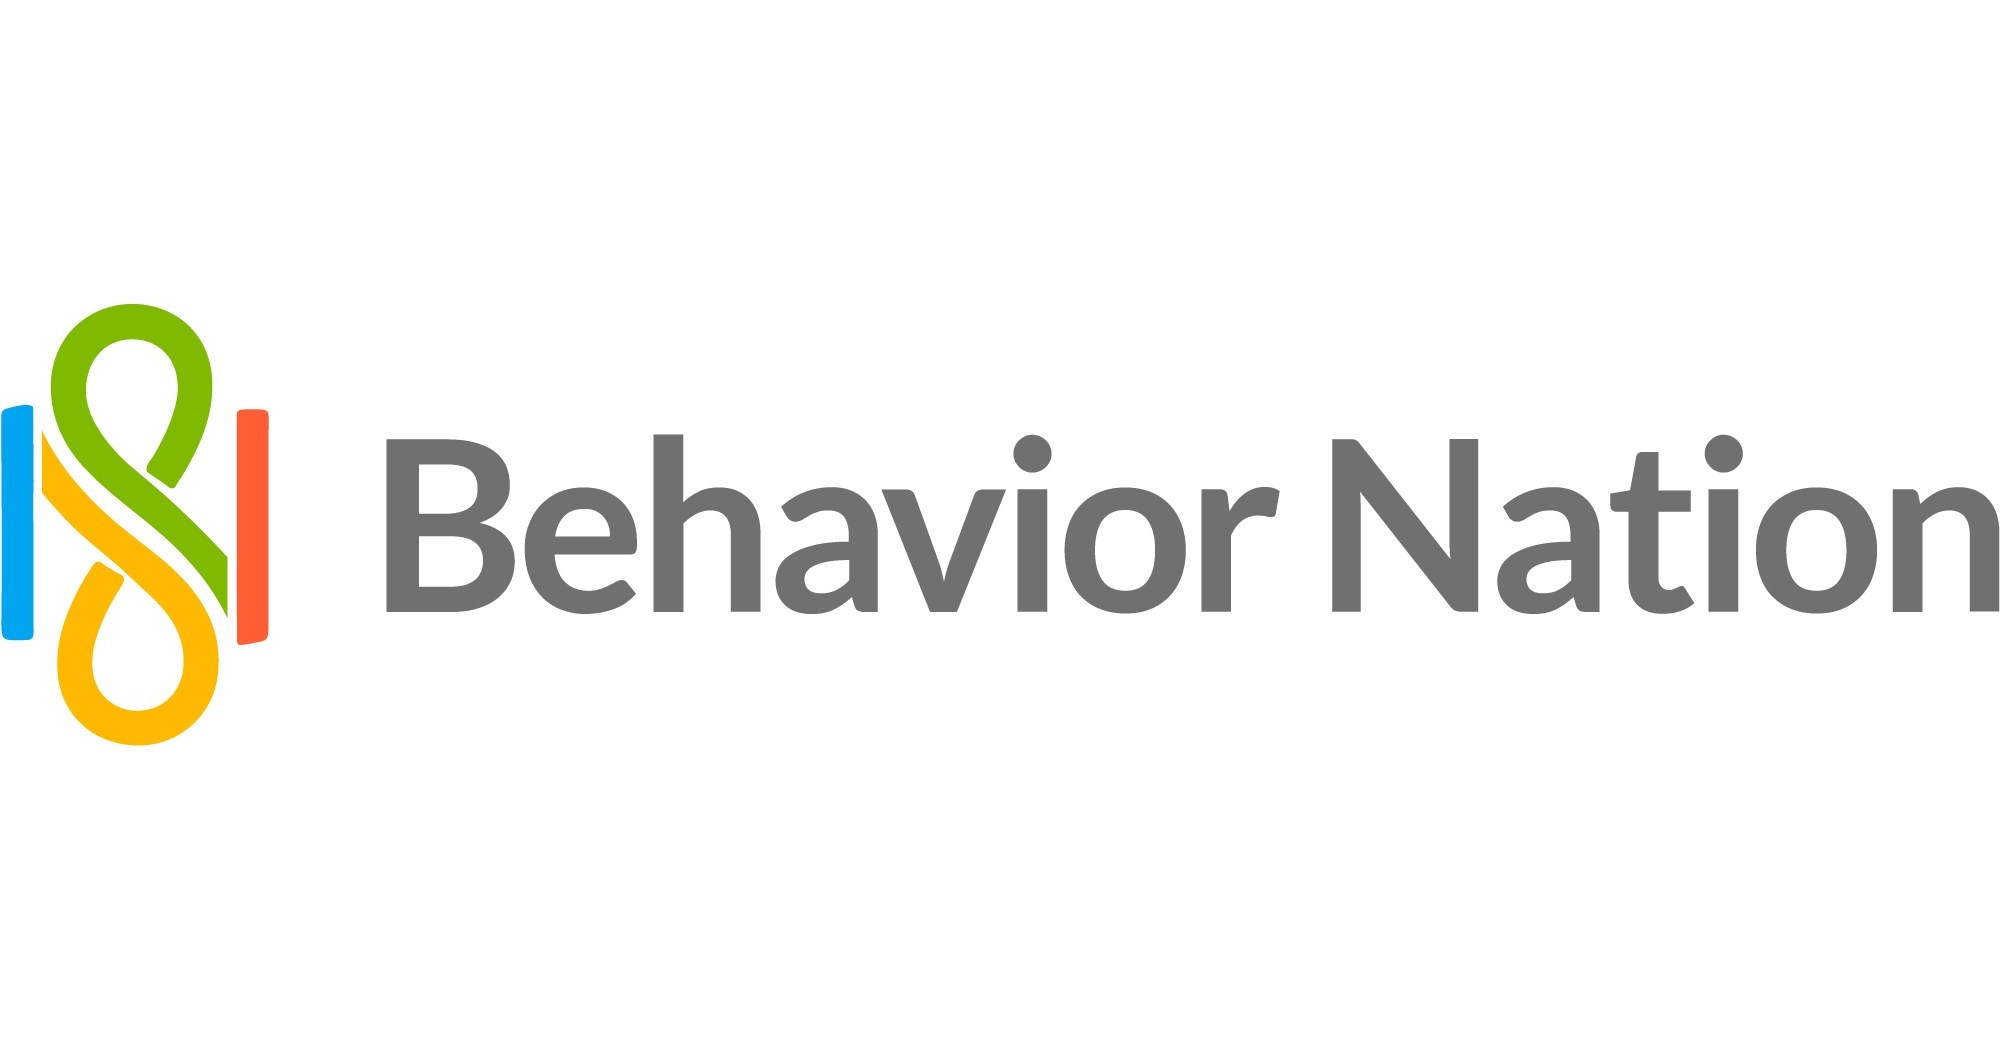 Behavior Nation Ranks No. 359 on the 2022 Inc. 5000 Annual List